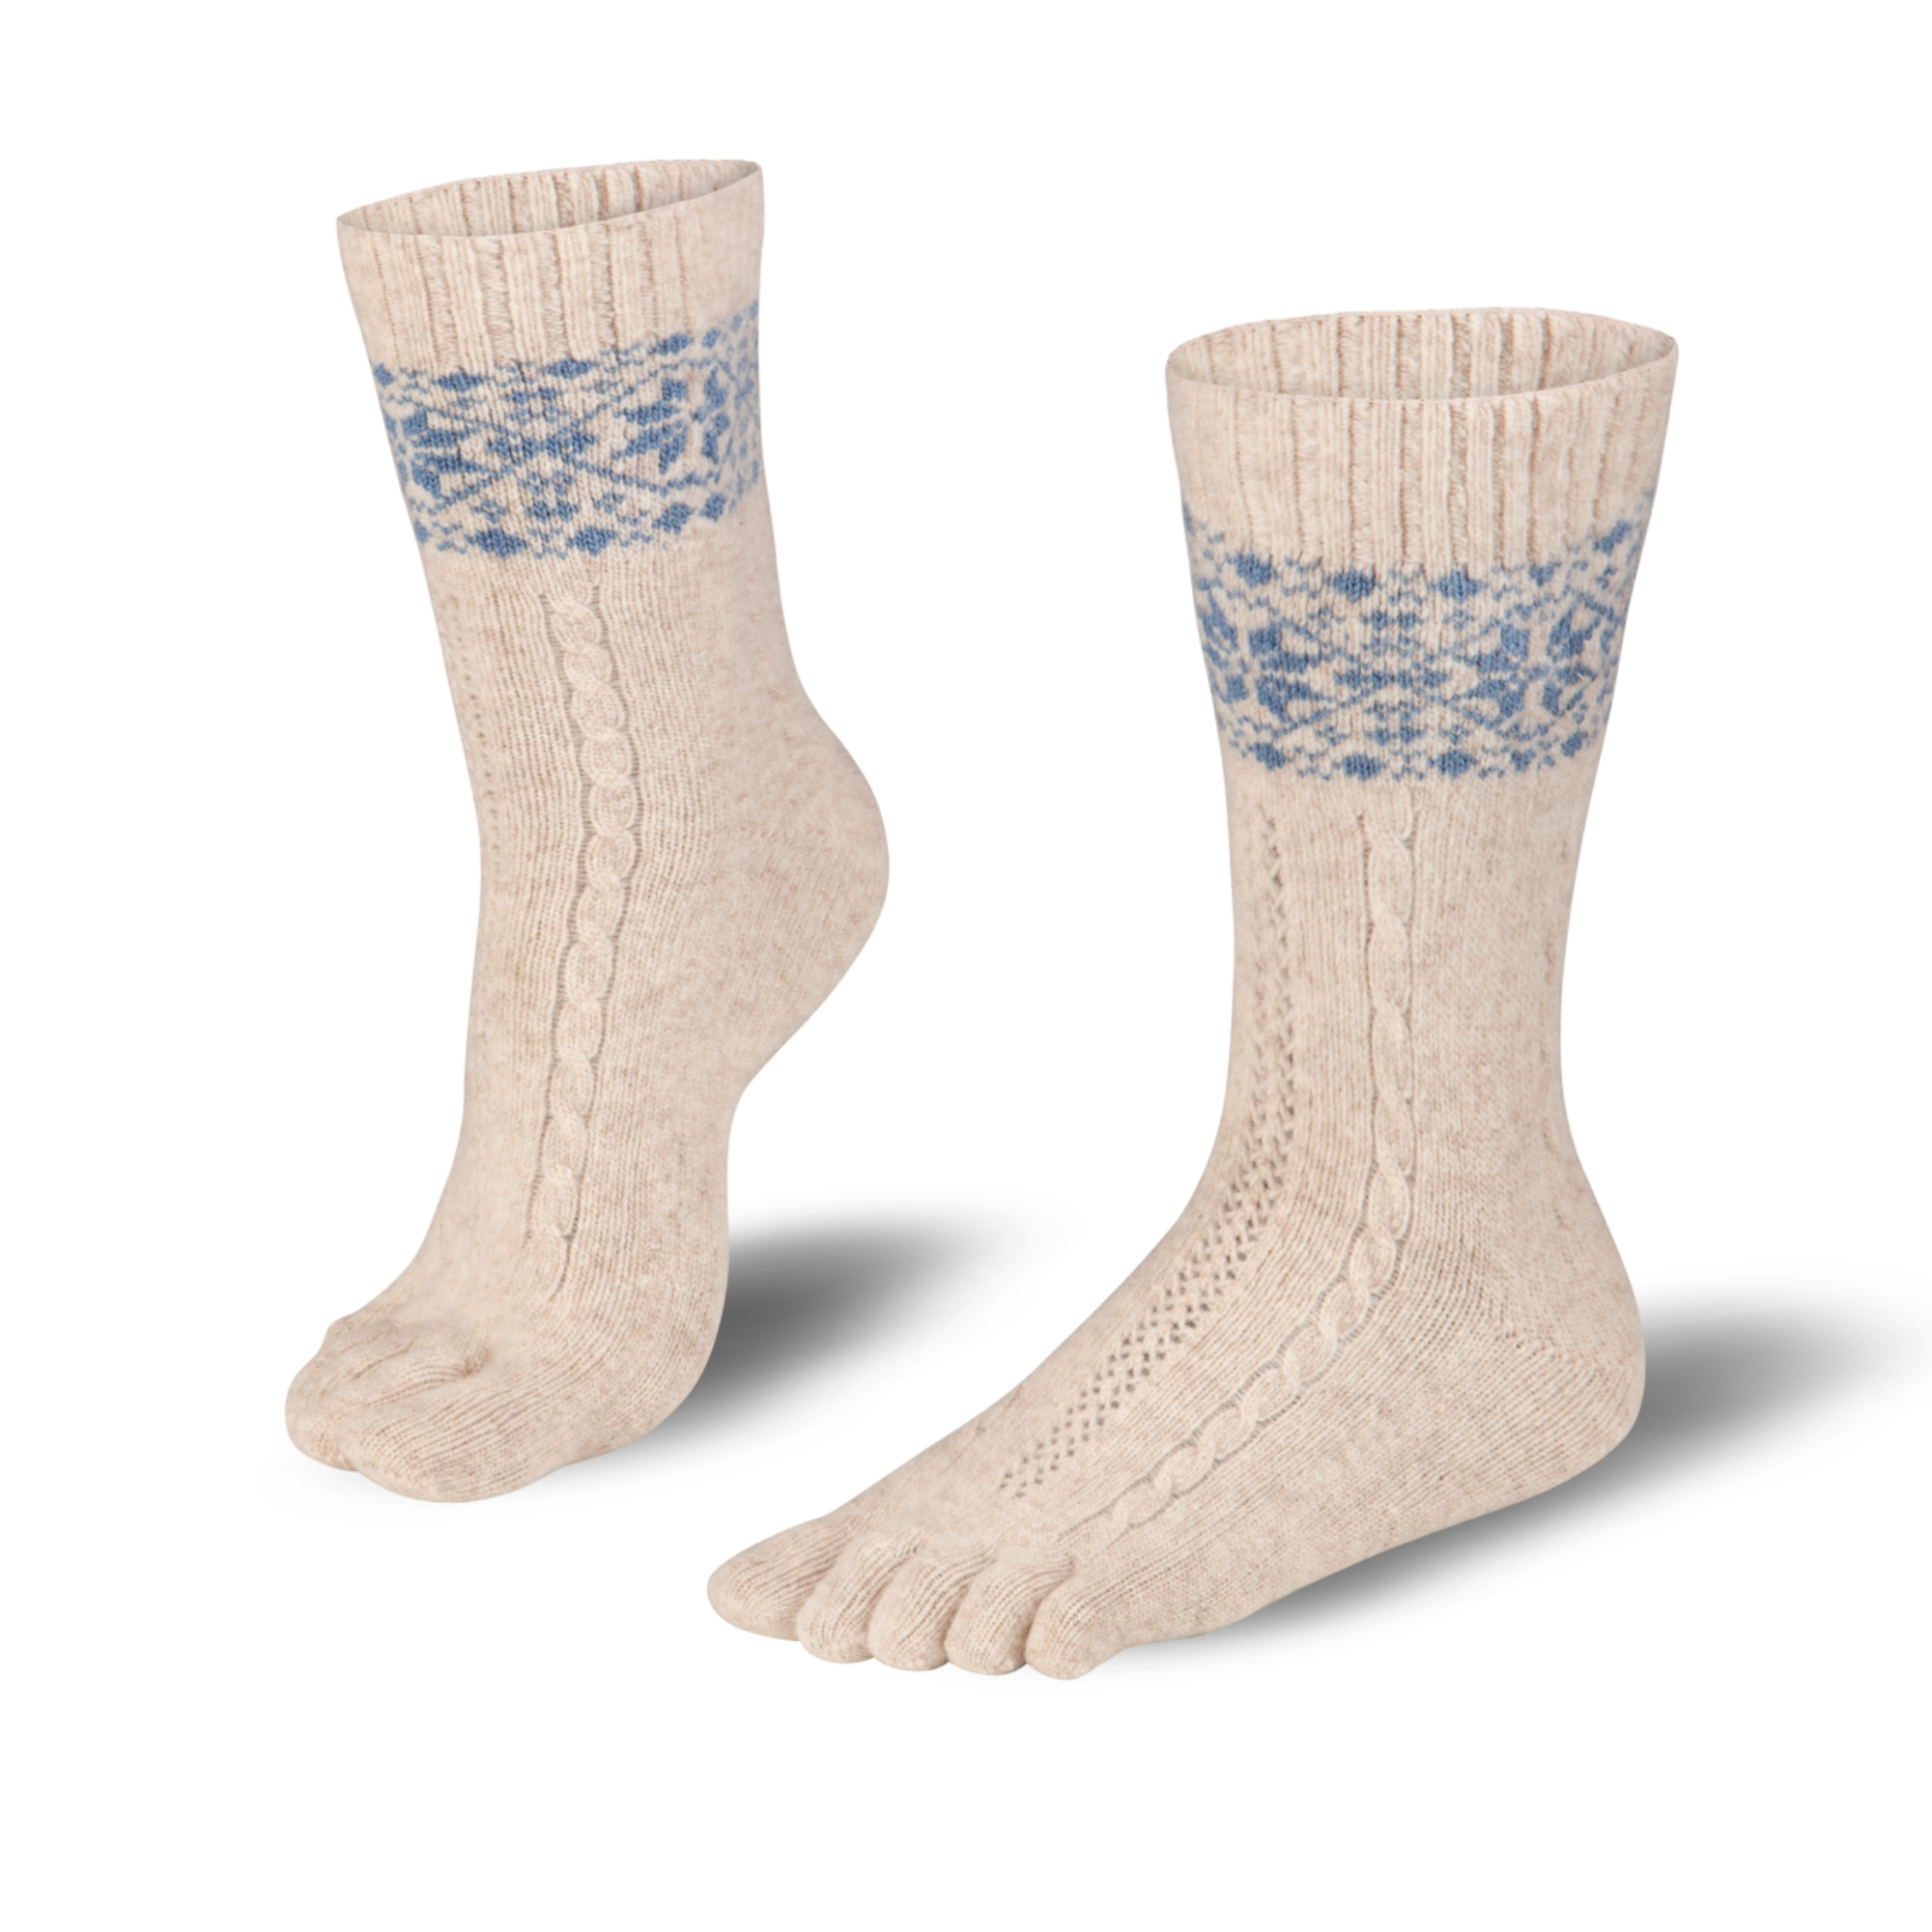 KNITIDO ponožky Merino Cashmire Snowflakes beige/blau